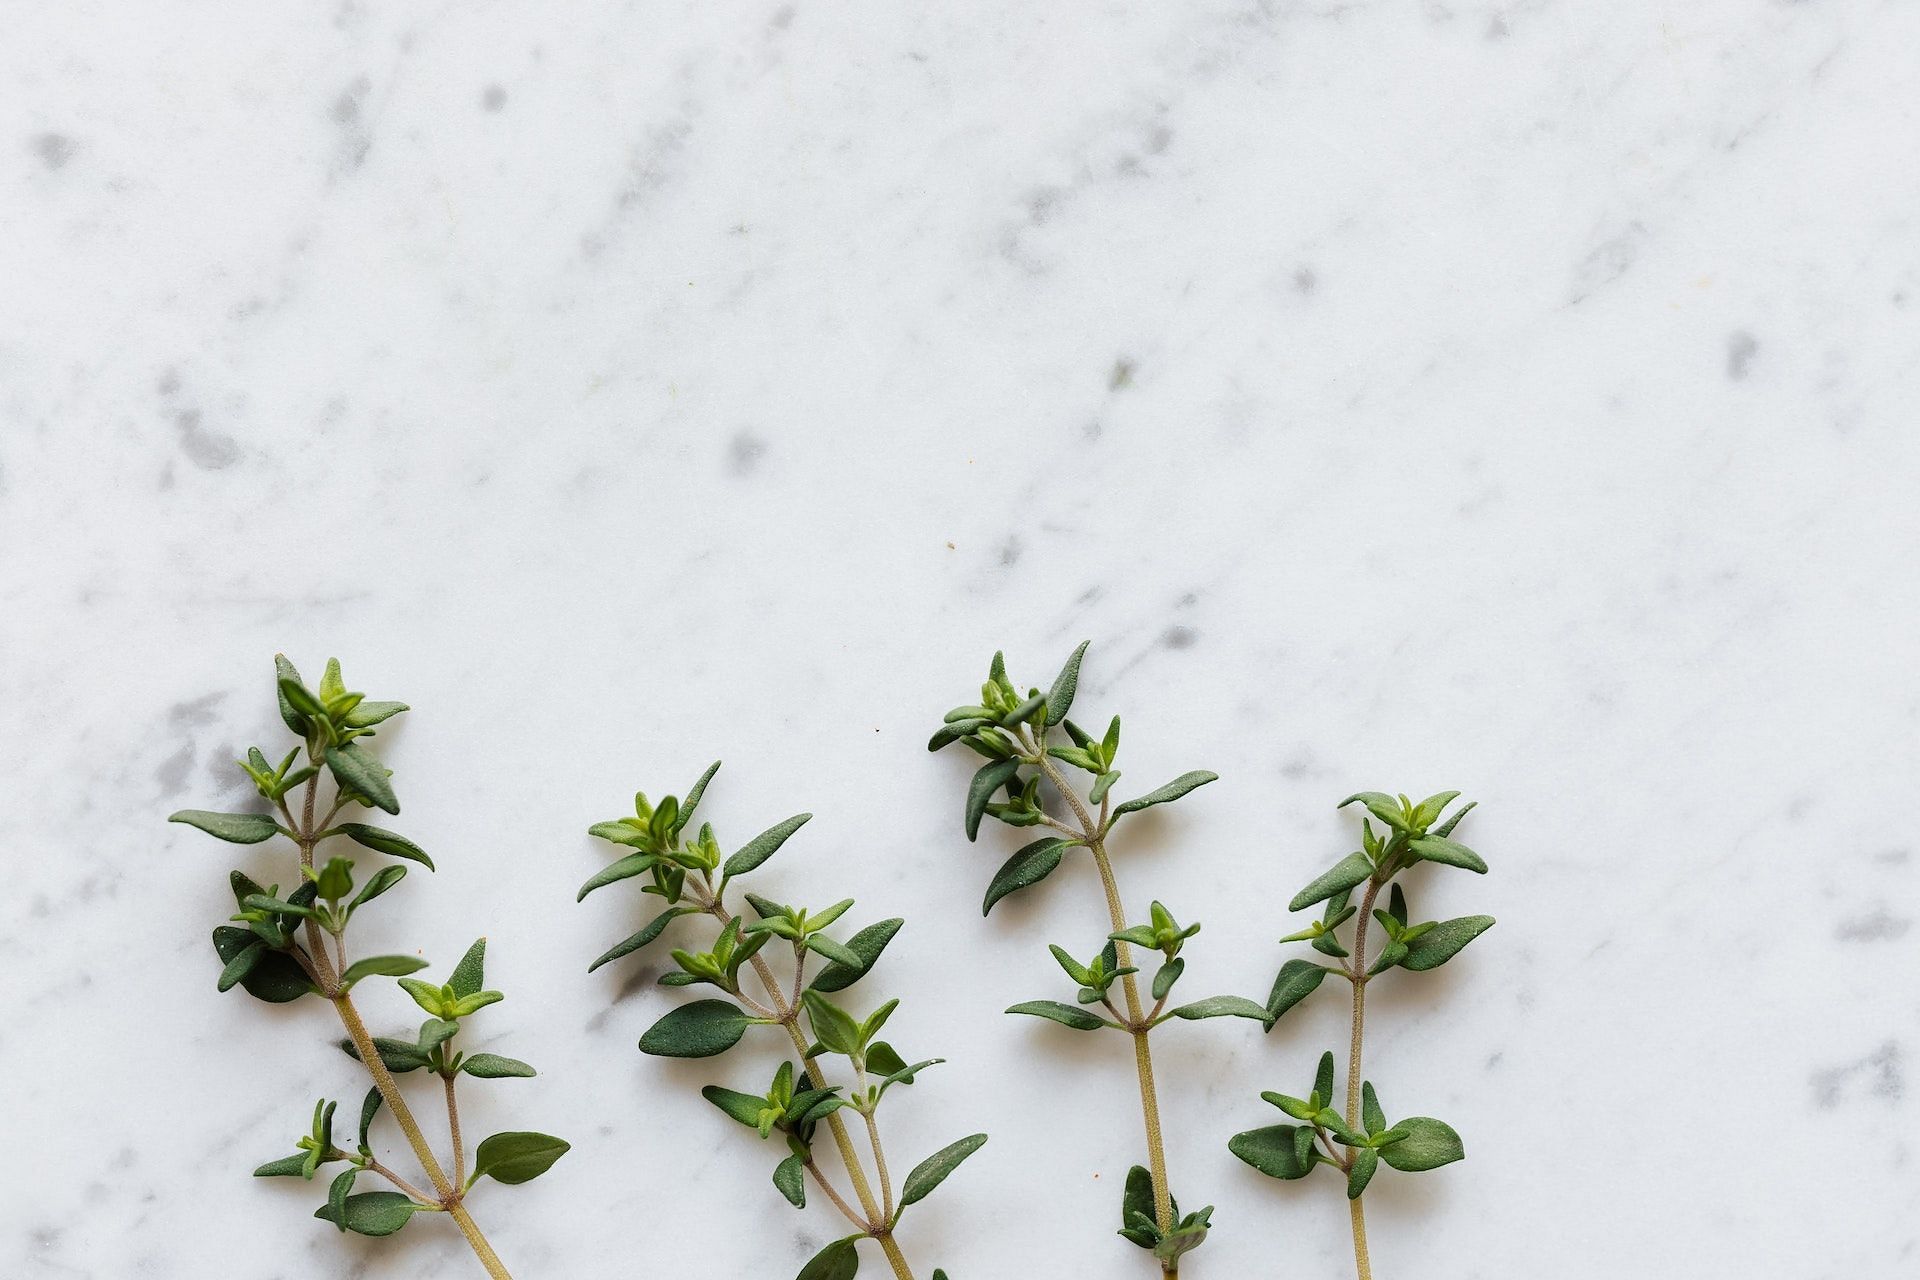 Thyme is a flavorful herb. (Photo via Pexels/Karolina Grabowska)